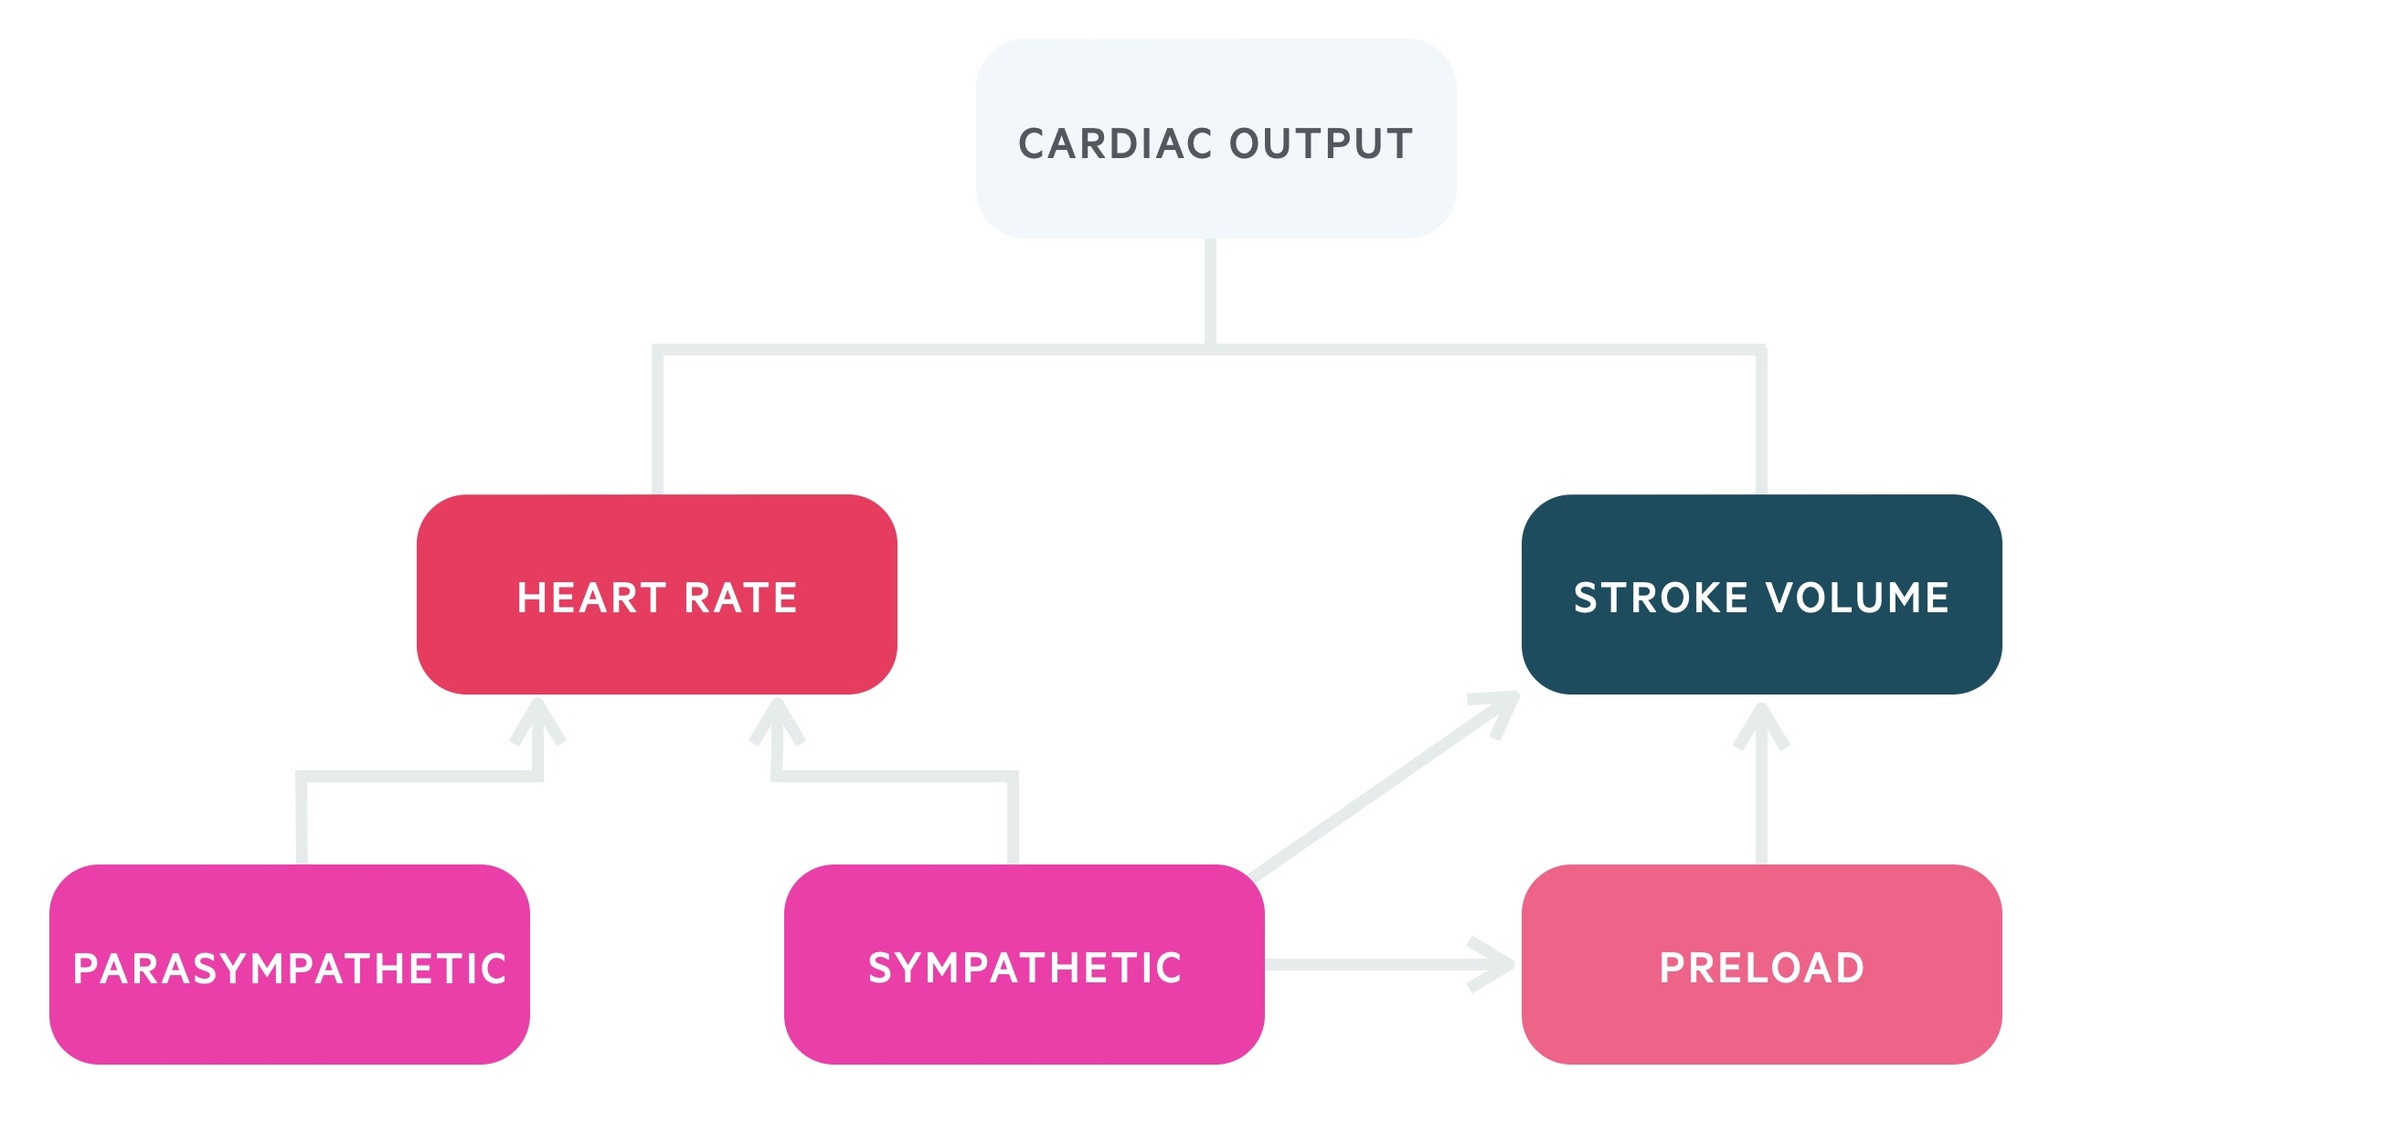 Control of cardiac output